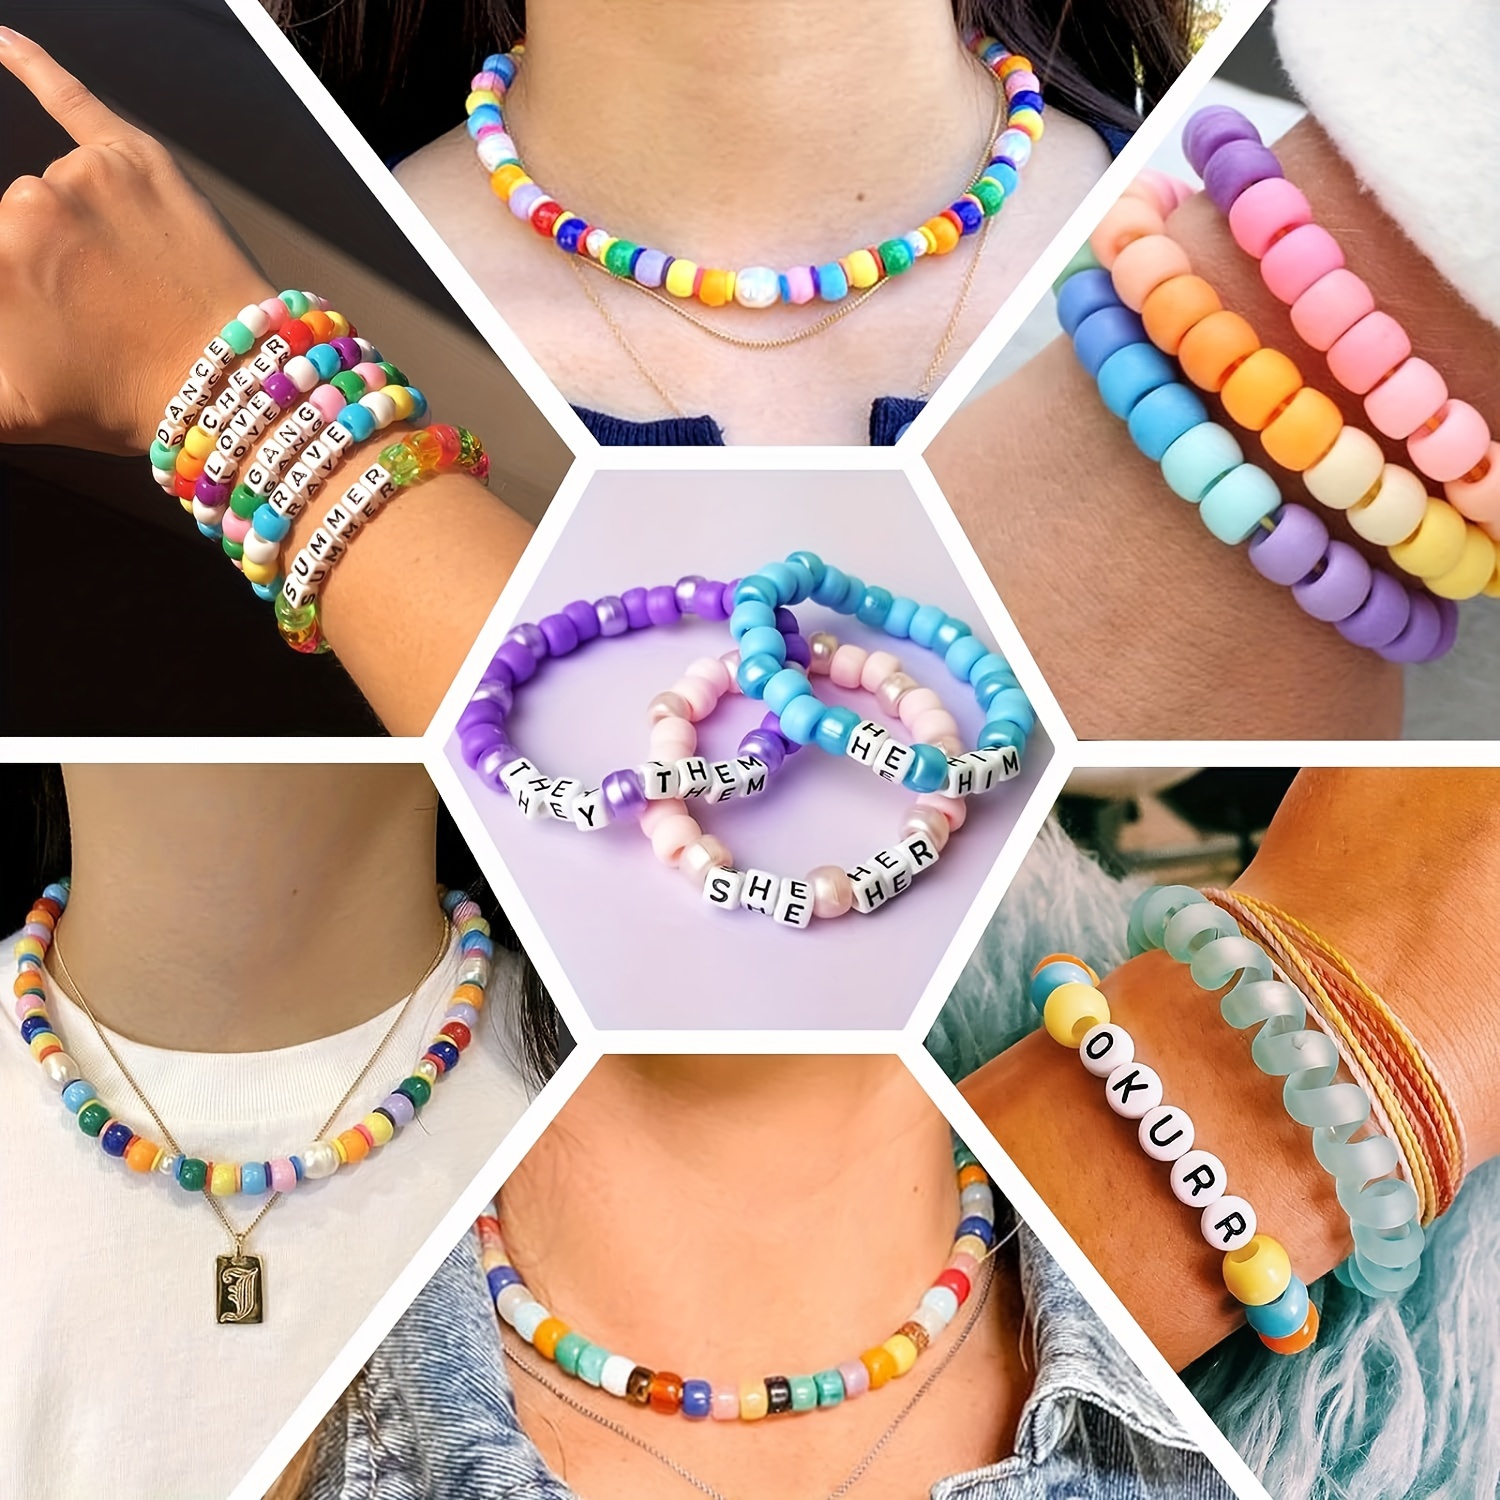 840pcs DIY Charm Bracelet Making Kit for Girls, Bead Jewelry